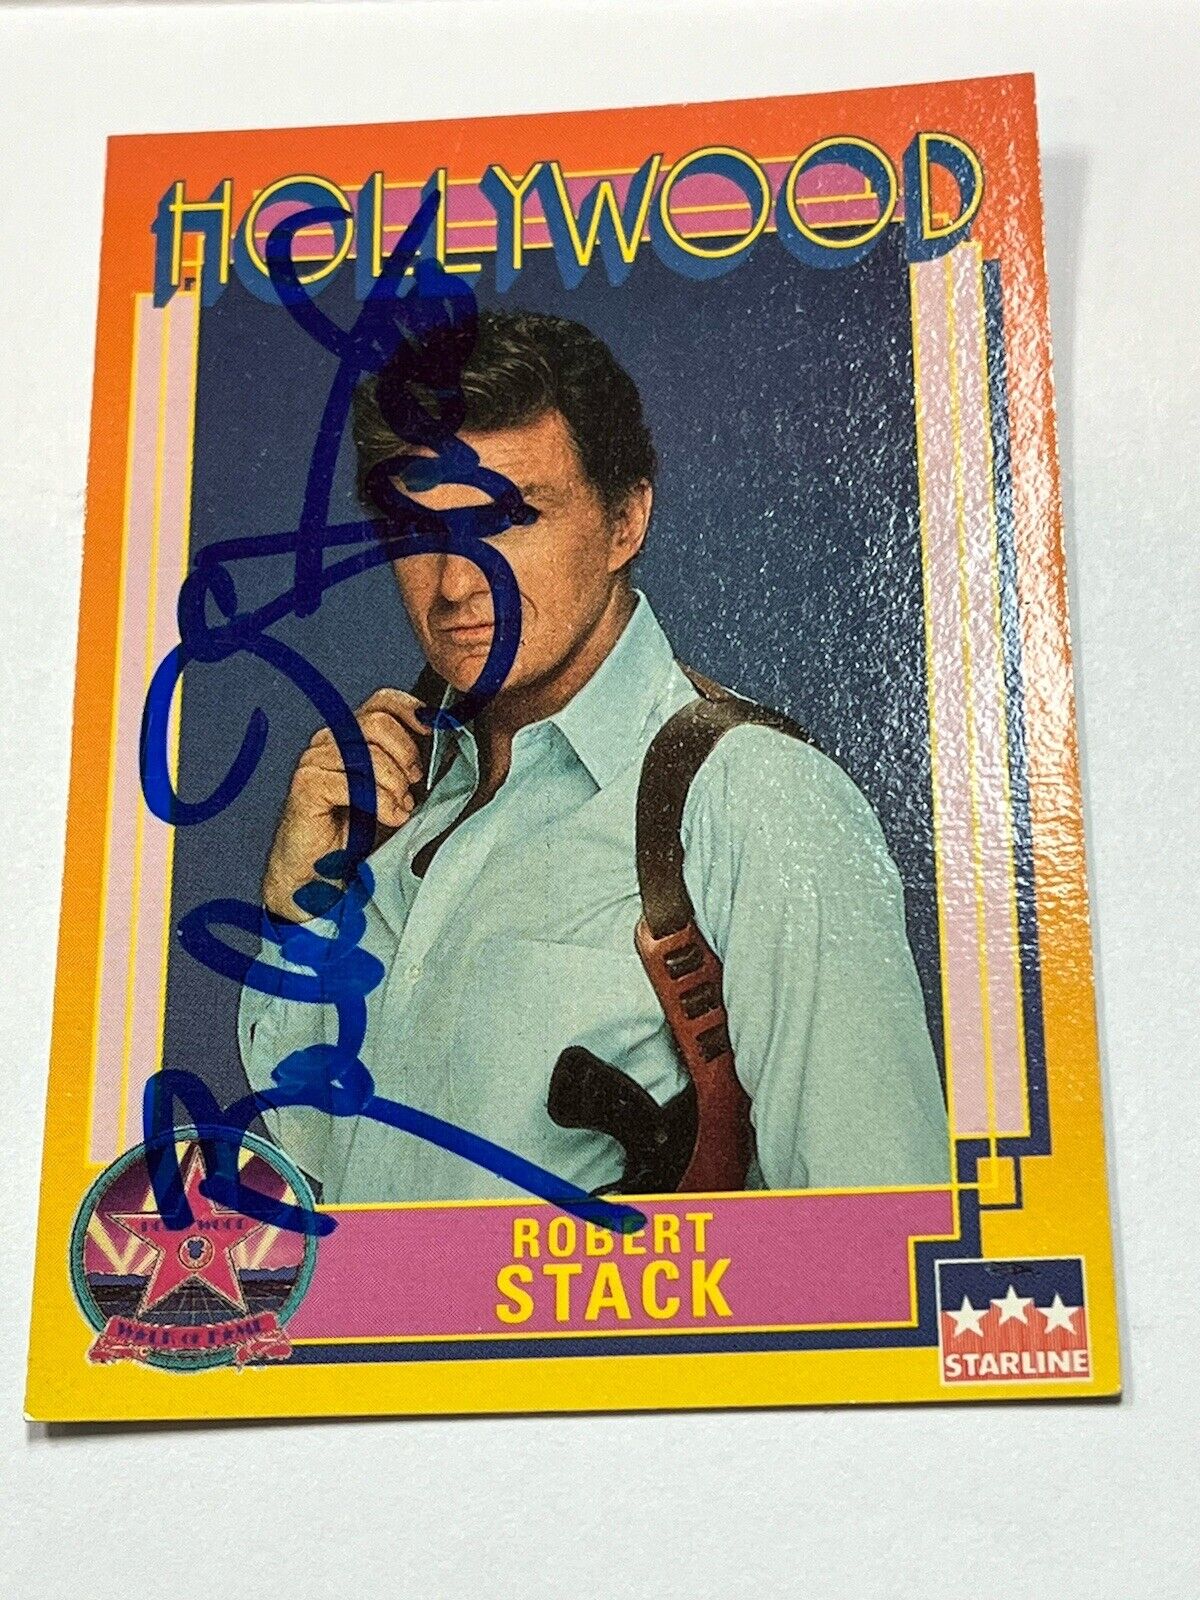 1991 #173 ROBERT STACK HOLLYWOOD STARLINE SIGNED WALK OF FAME CARD